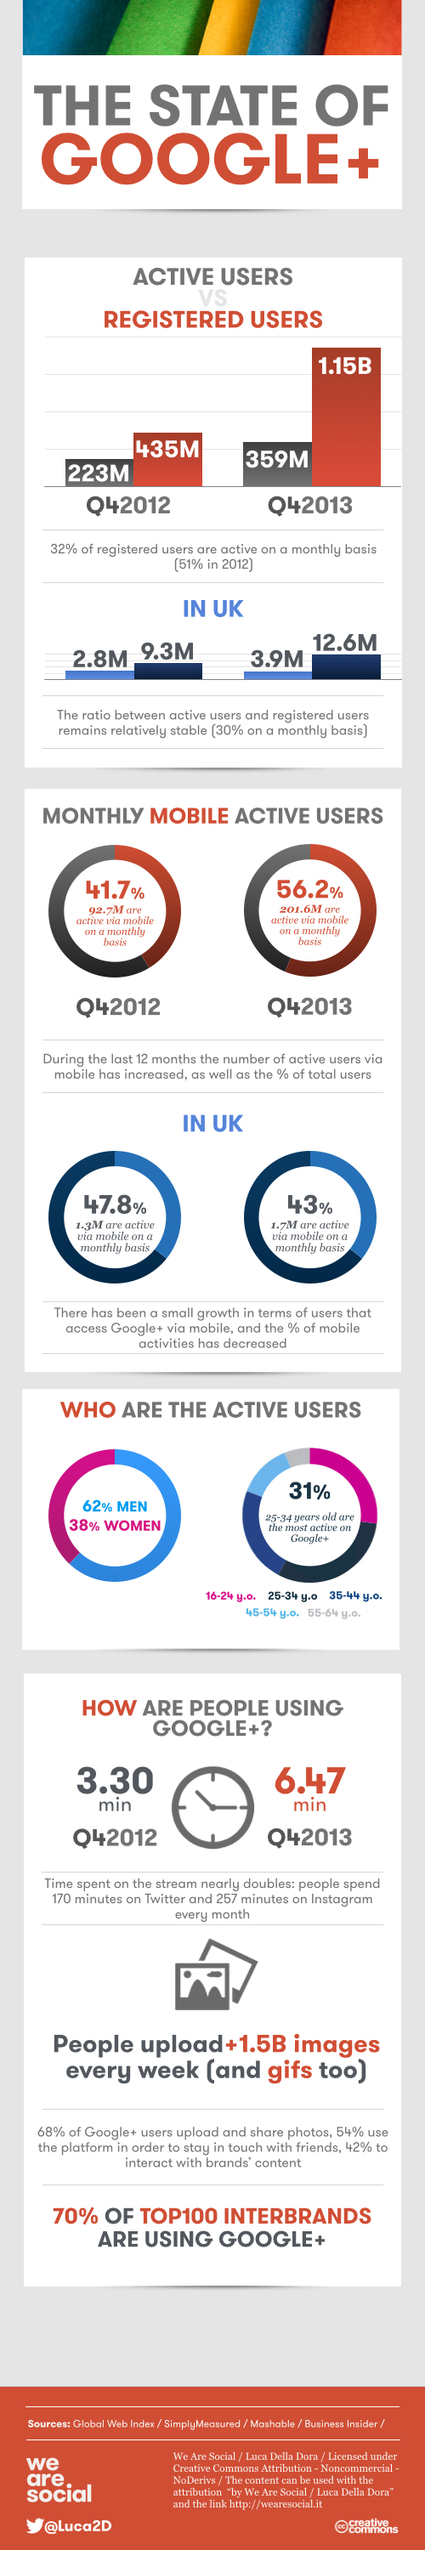 Google+ now has 1.15 billion users! | e-commerce & social media | Scoop.it